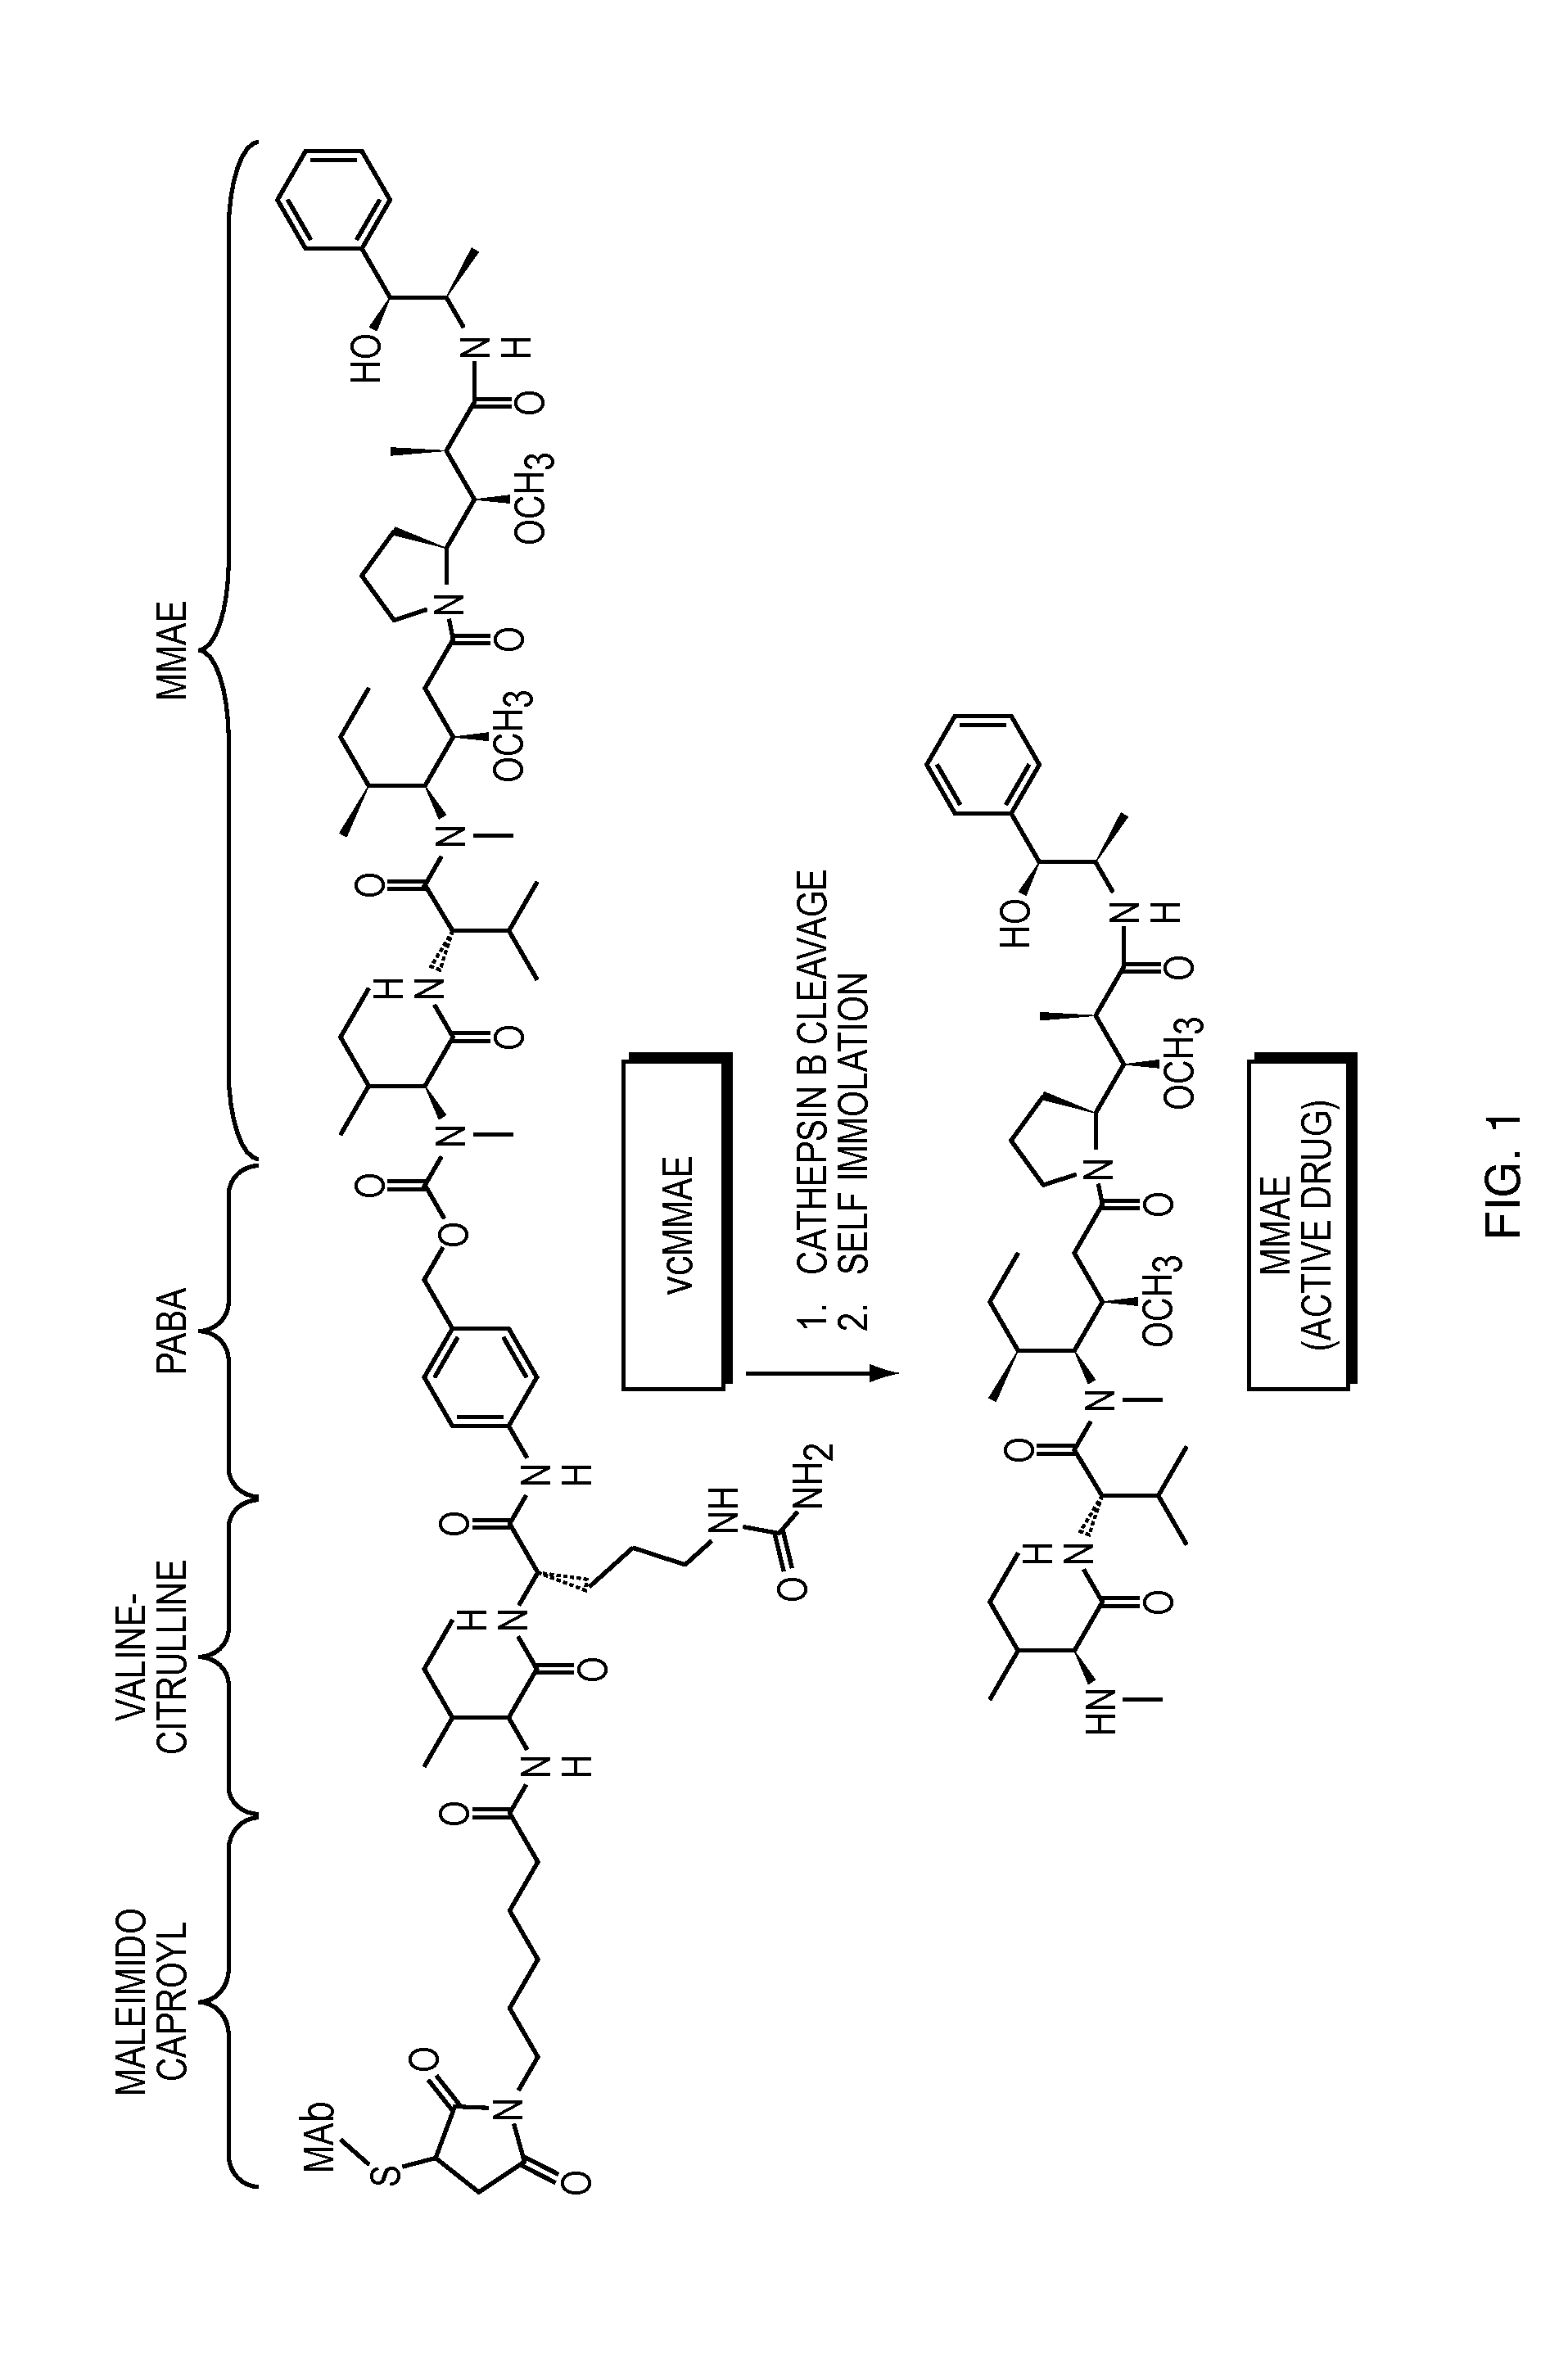 Anti-egfr antibody drug conjugate formulations